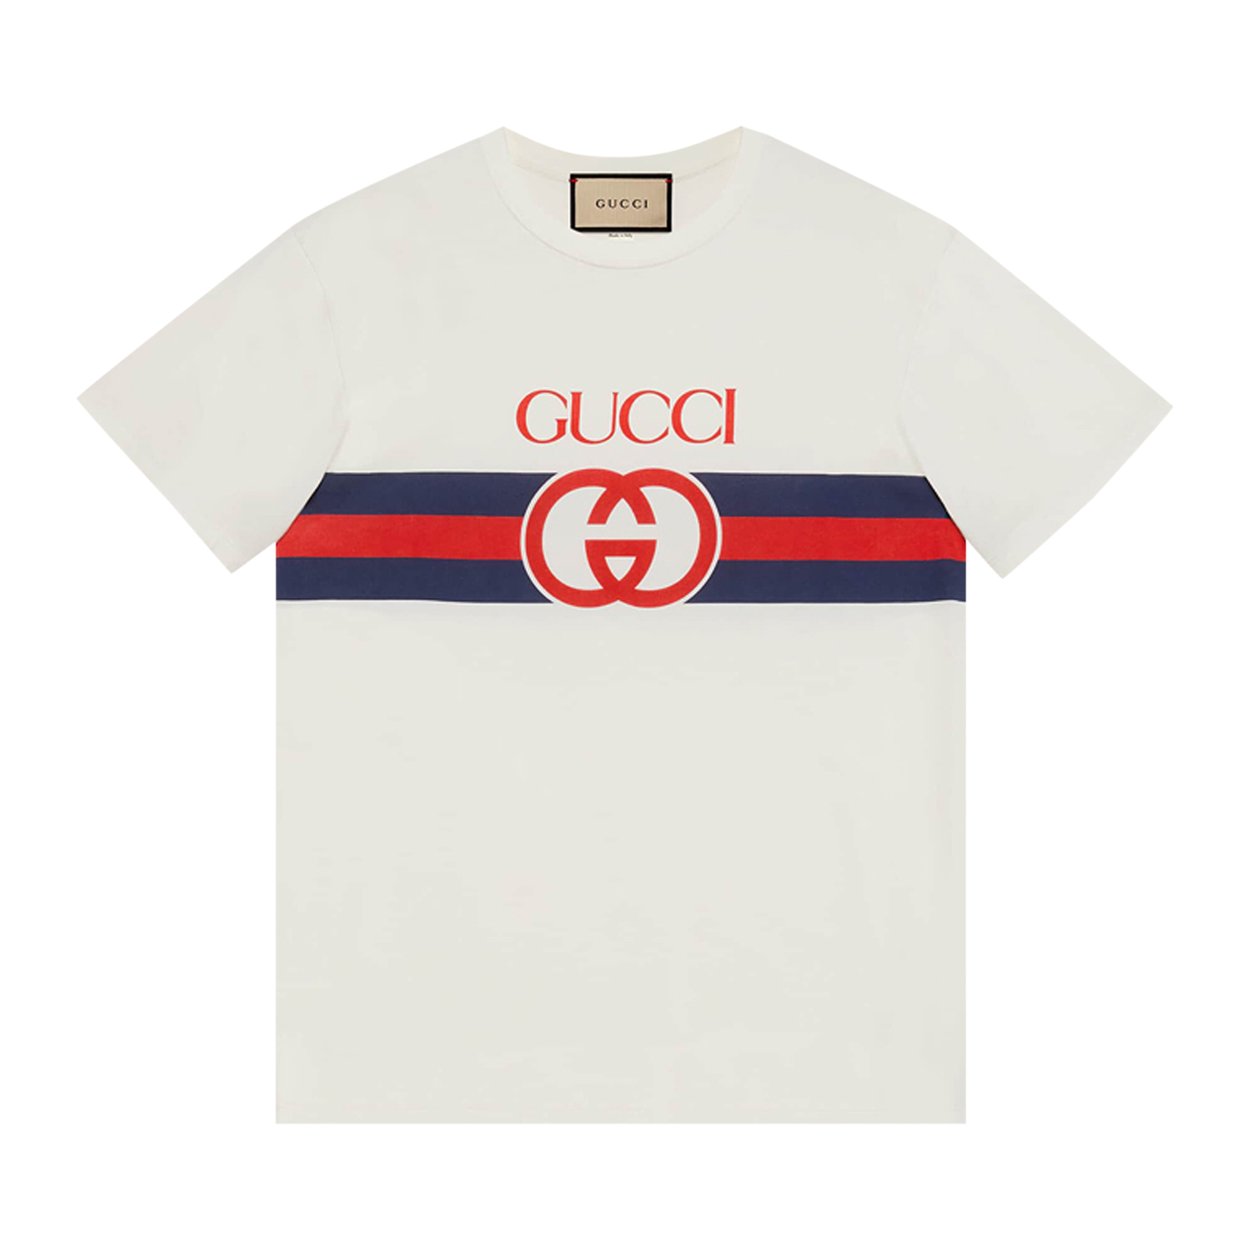 Buy Gucci Interlocking G T-Shirt 'White' - 548334 XJET1 9095 | GOAT